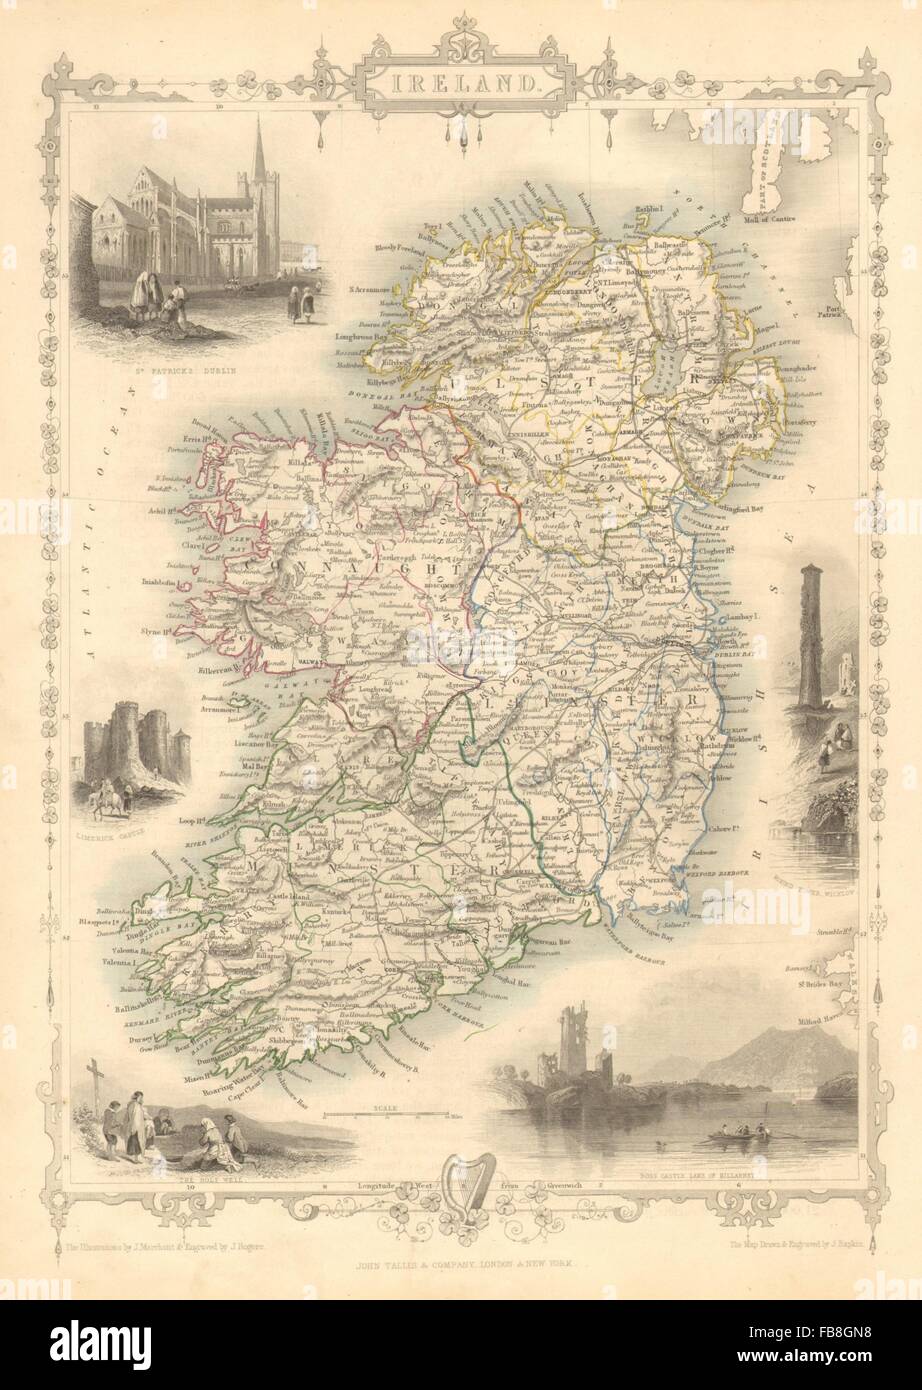 Irlande : Dublin St Patrick's Killarney round tower views.TALLIS/RAPKIN, 1851 map Banque D'Images